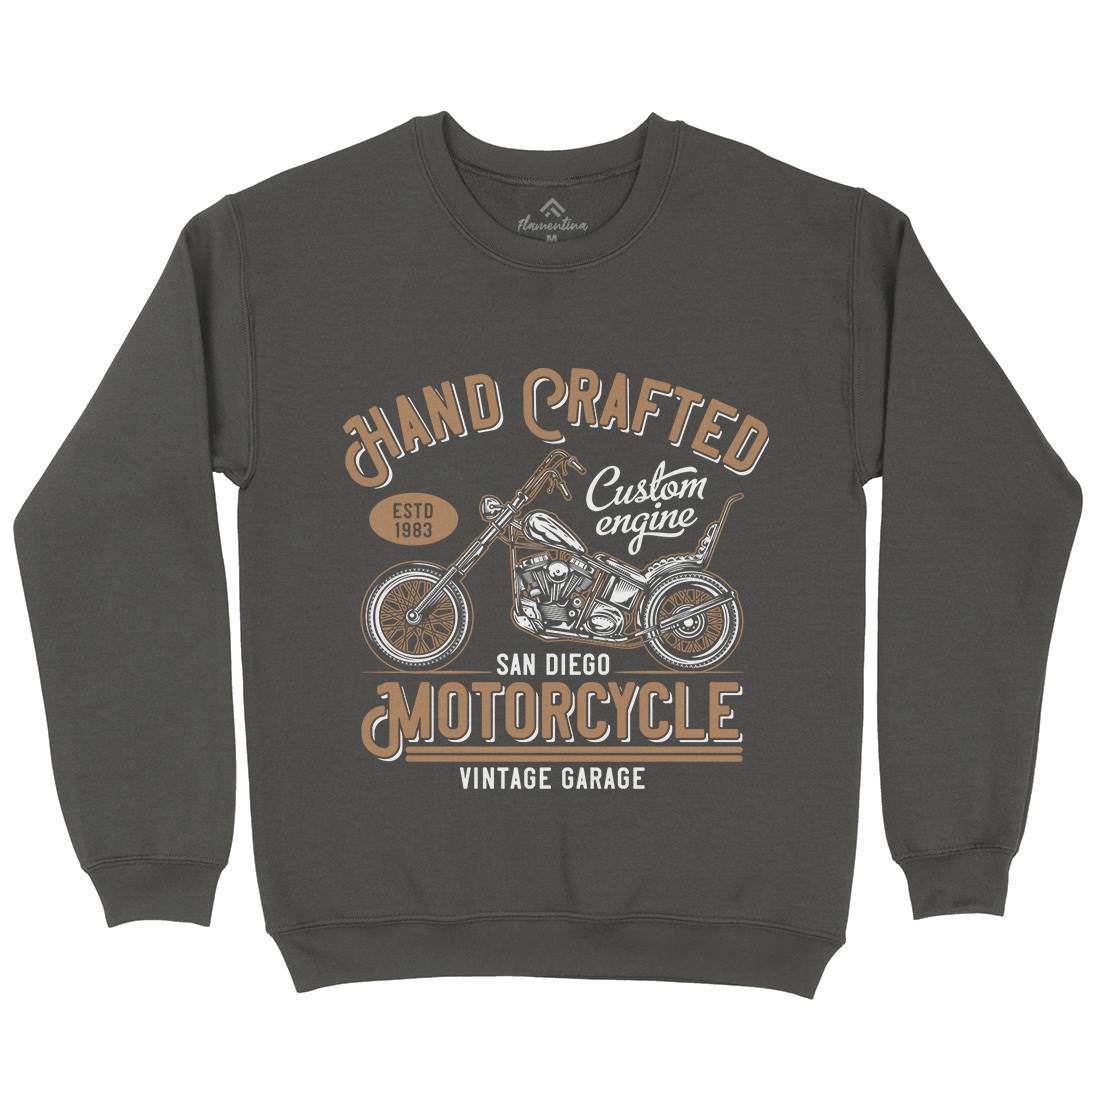 Hand Crafted Kids Crew Neck Sweatshirt Motorcycles B838